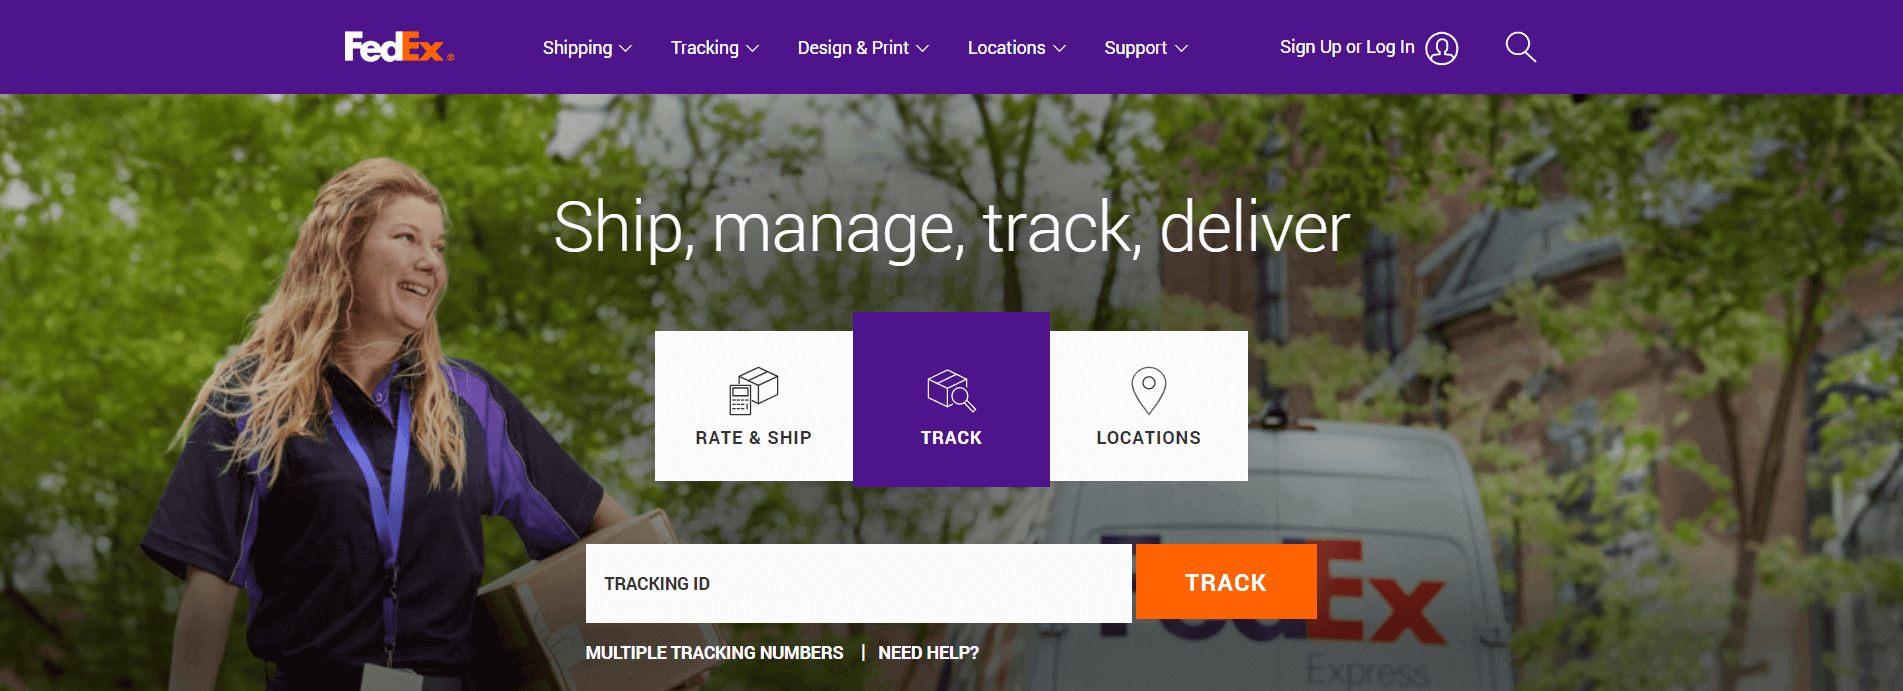 FedEx website